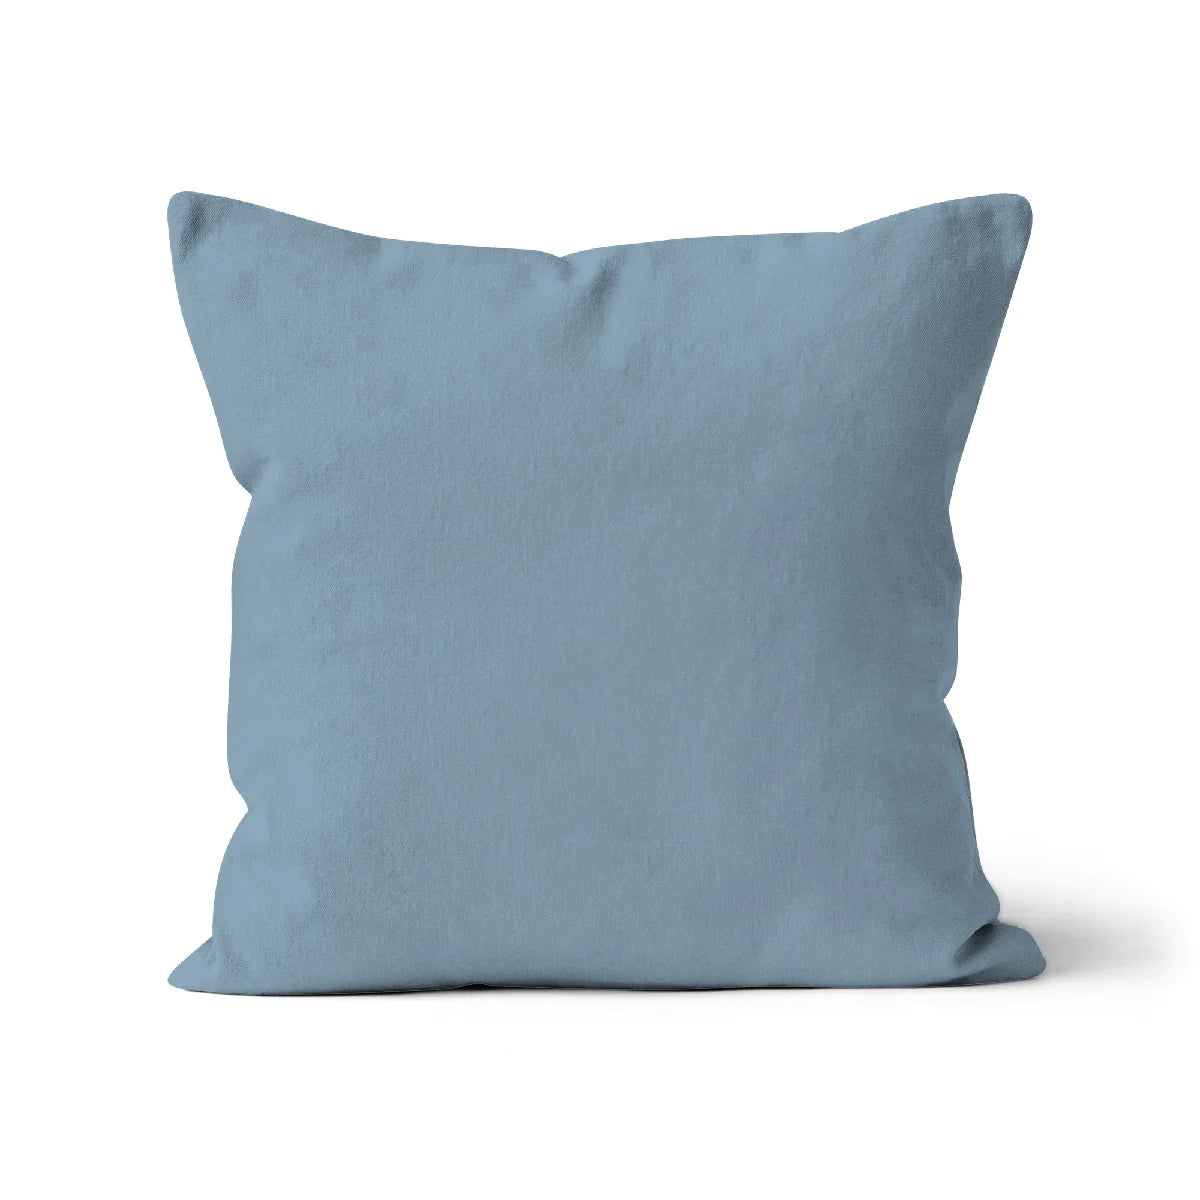 Organic cotton cushion cover. washable removable. grey blue plain colour cushion cover. Square shaped cushion cover